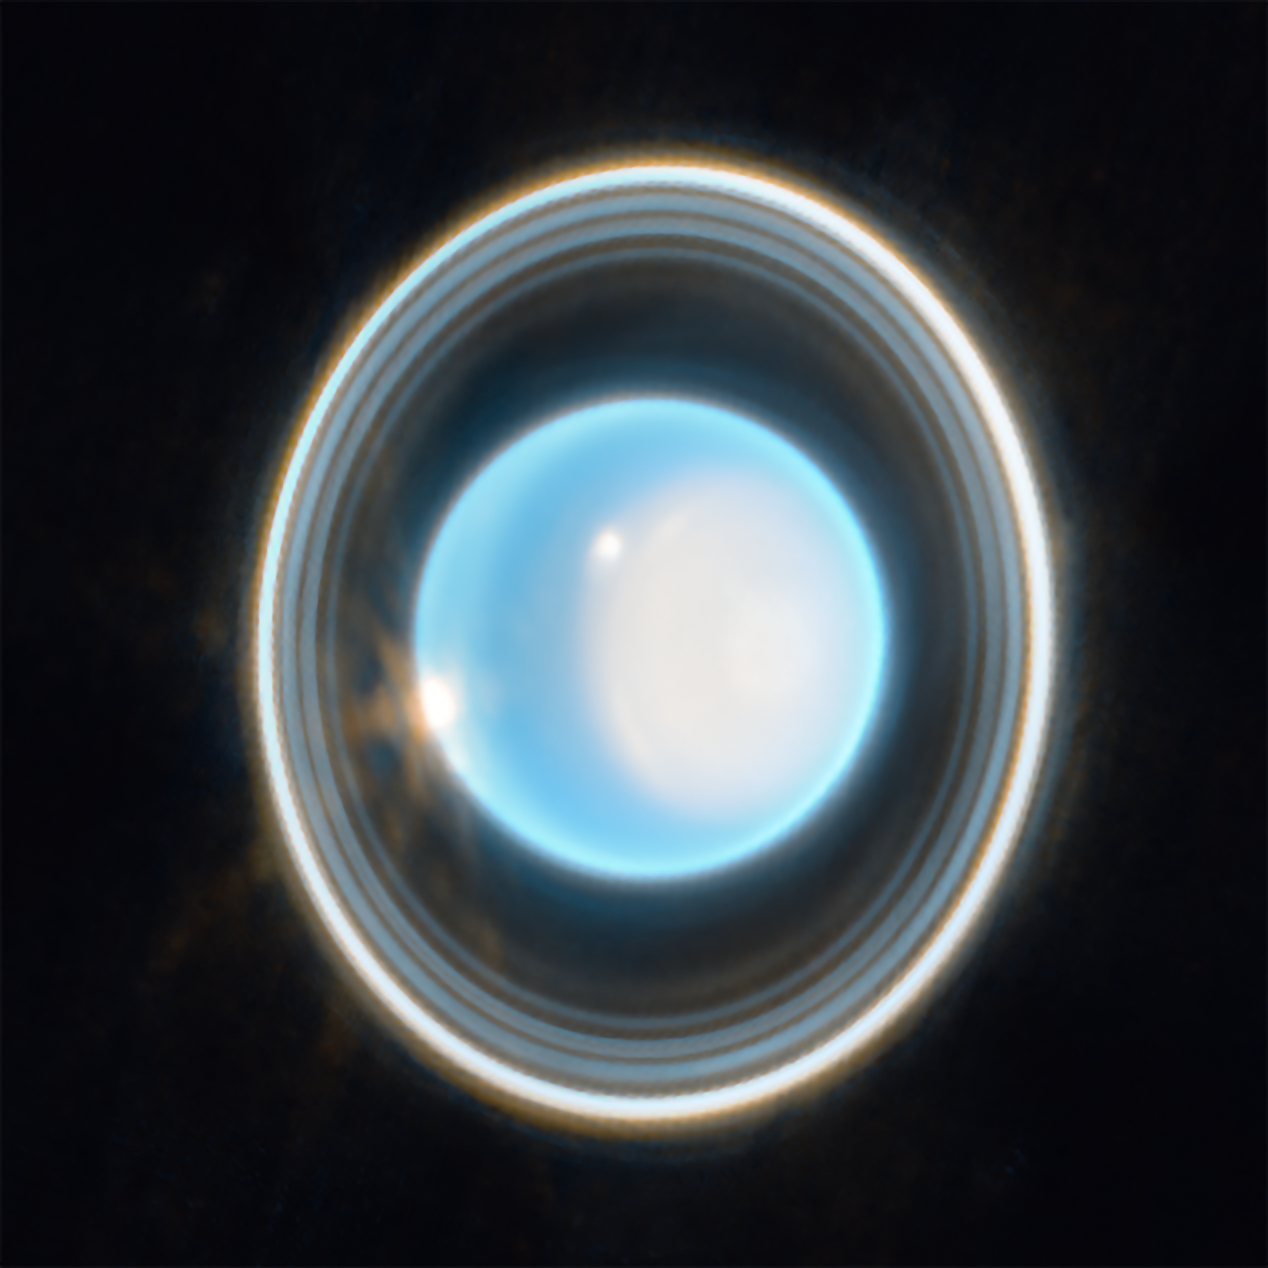 November’s Night Sky Notes: Spy the Seventh Planet, Uranus